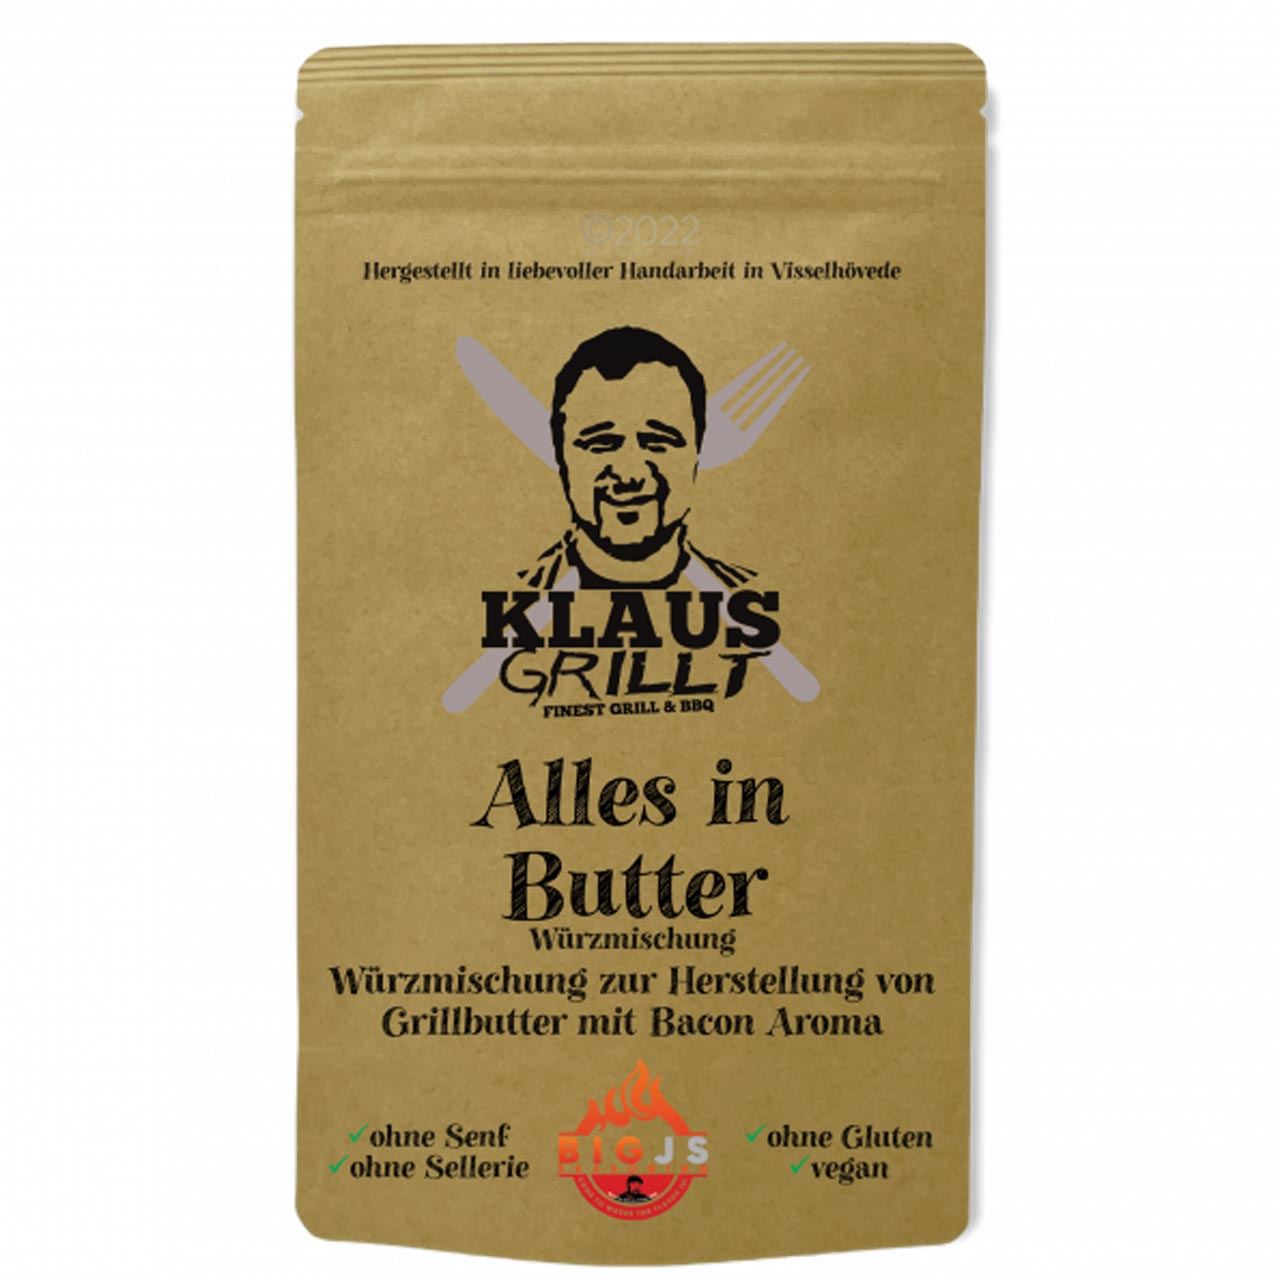 Klaus Grillt - Alles in Butter 250g Standbeutel